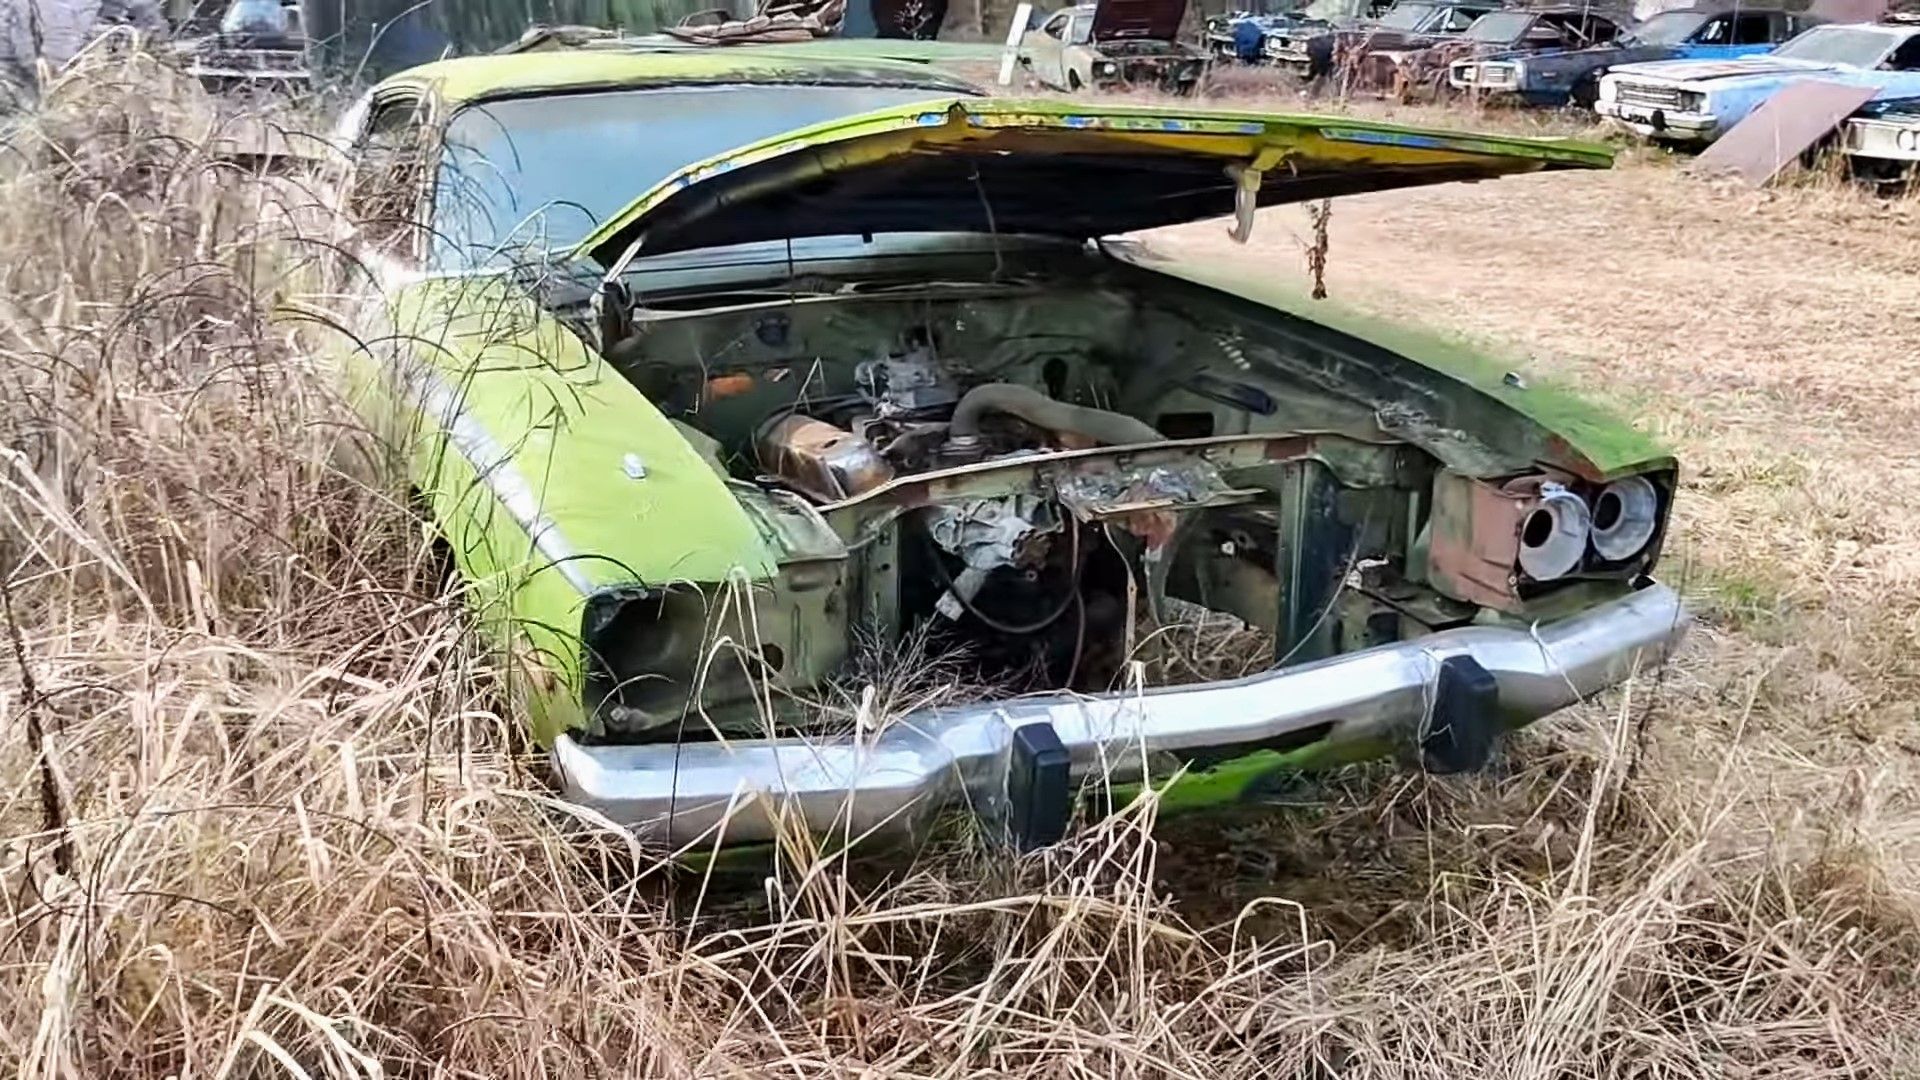 A green 1974 Plymouth Satellite Sebring junkyard find front quarter shot